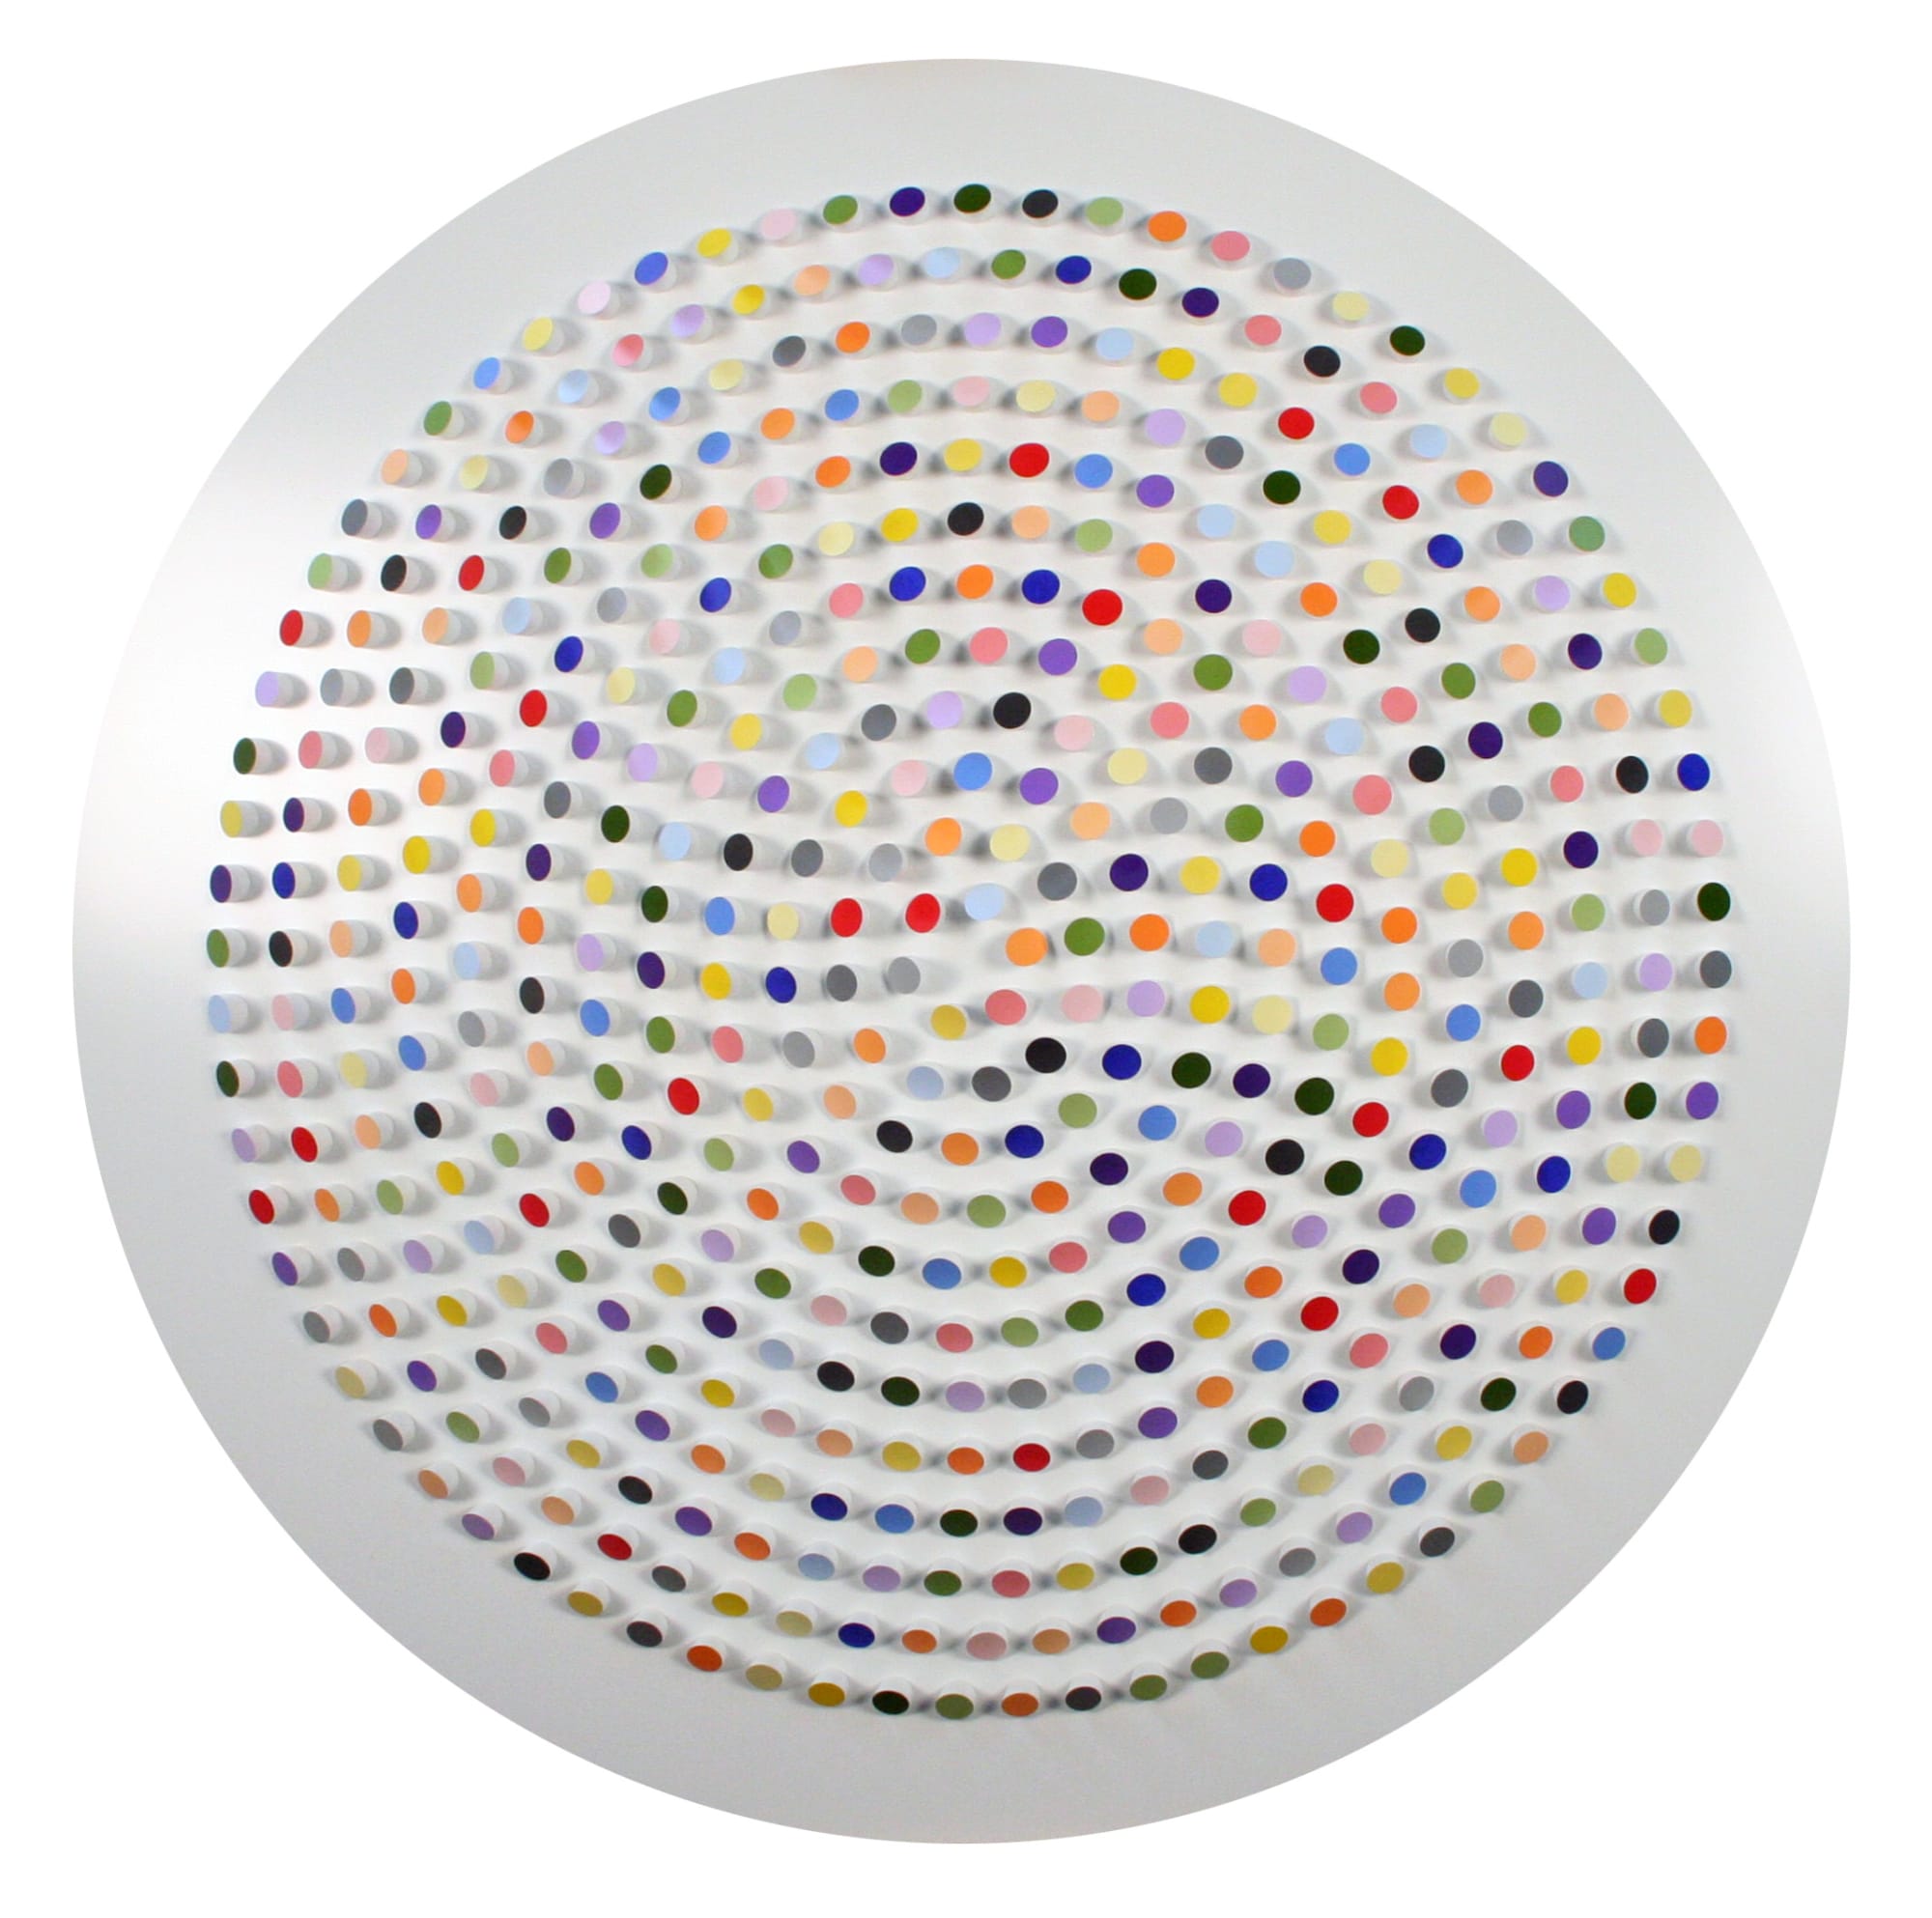 Peter Monaghan, Coloured Dowels, 2021 | Heather Gaudio Fine Art